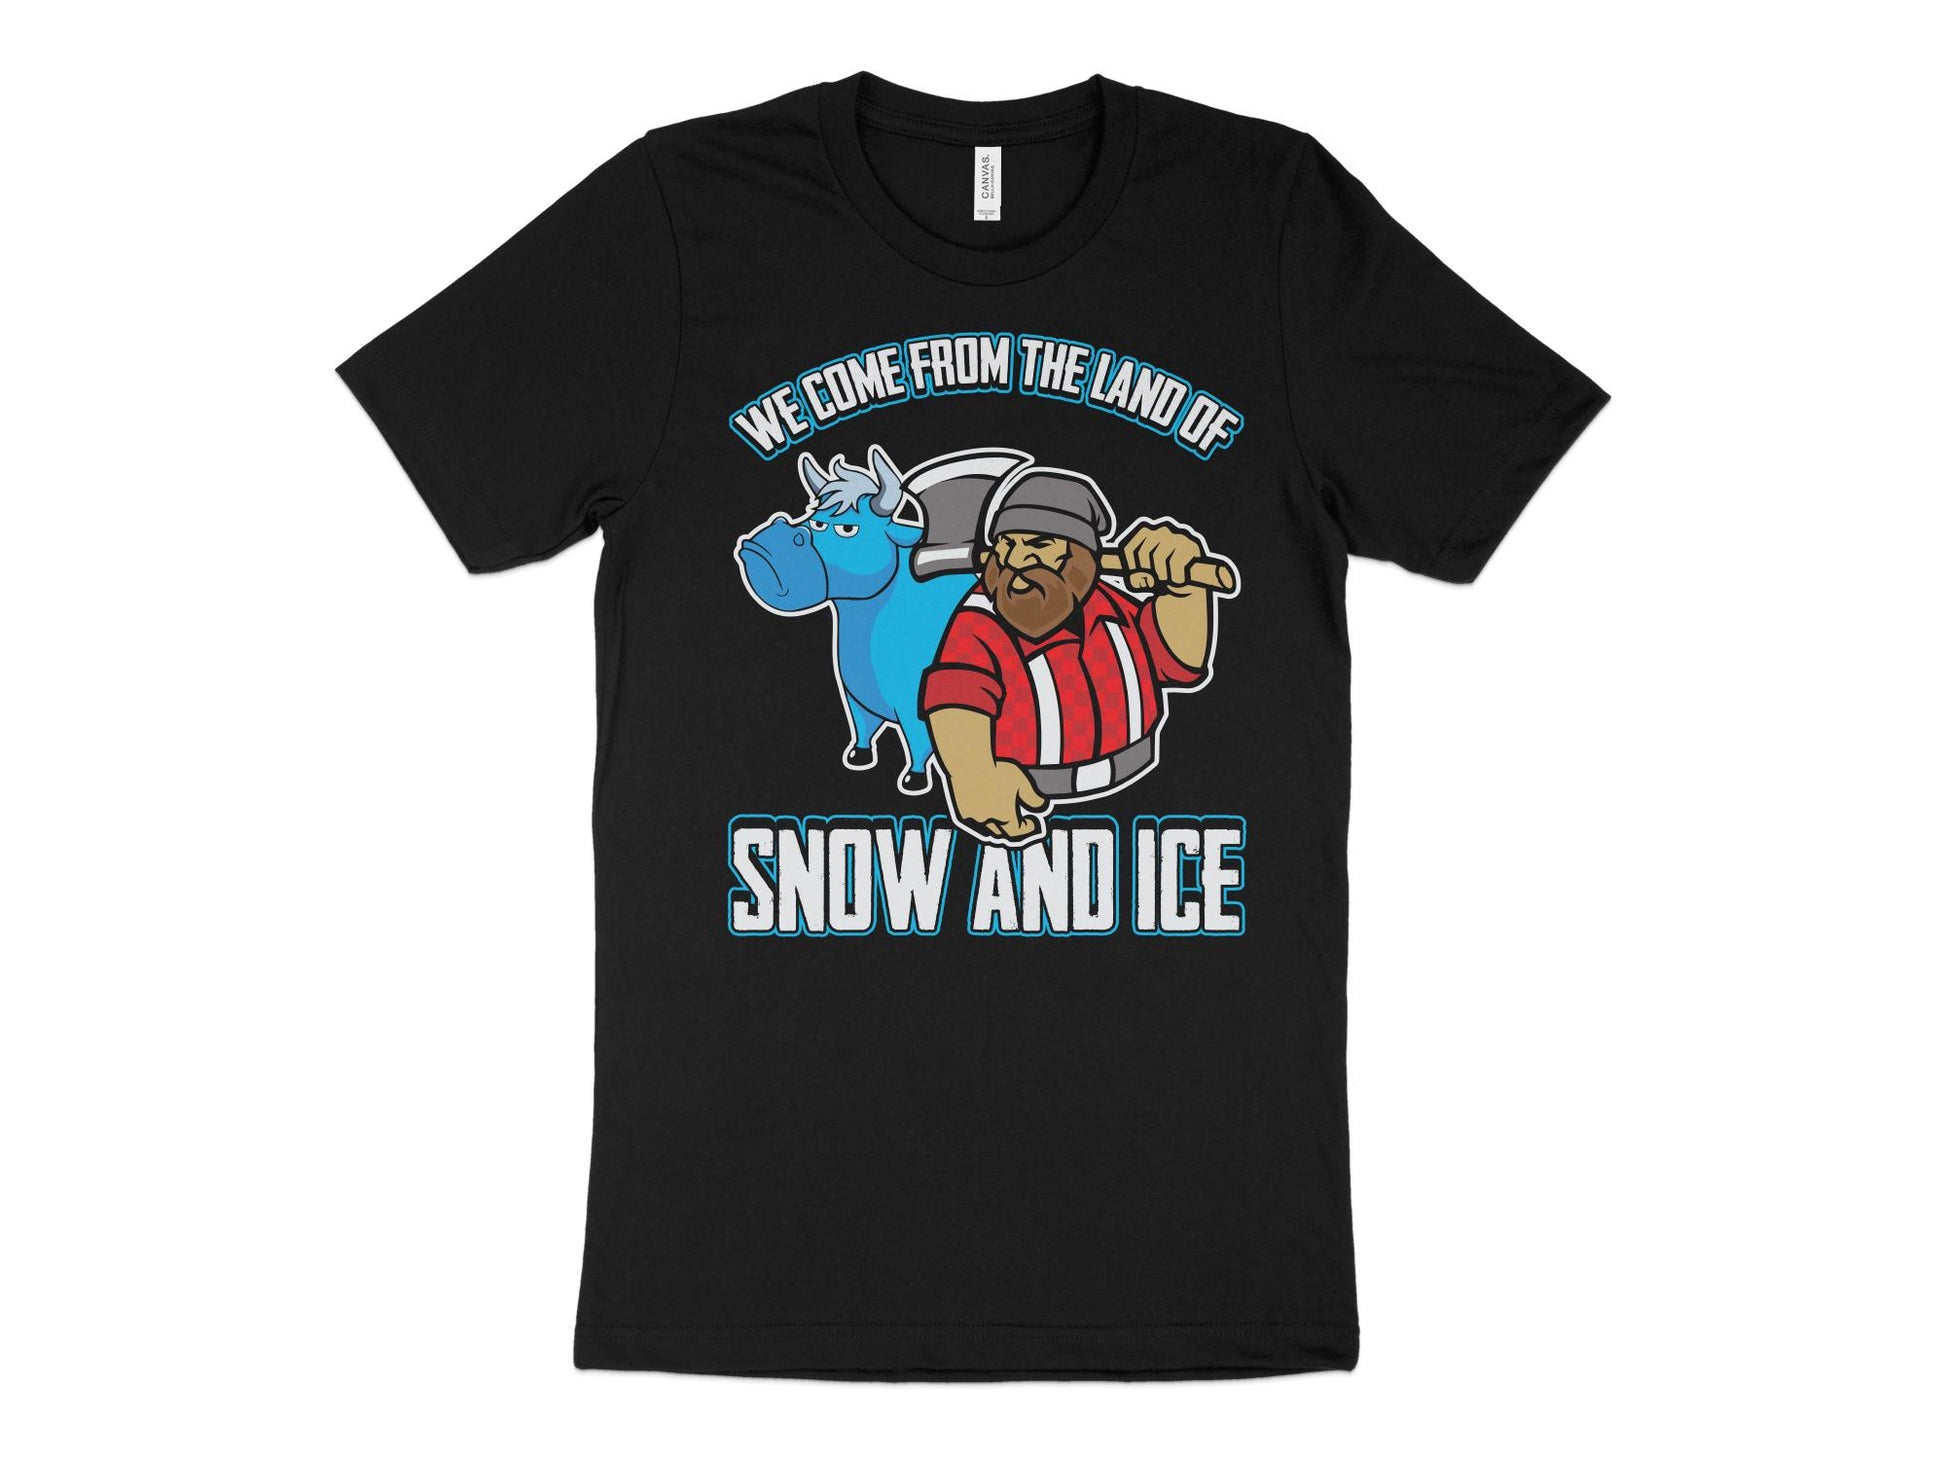 Minnesota T Shirt Land of Snow and Ice black